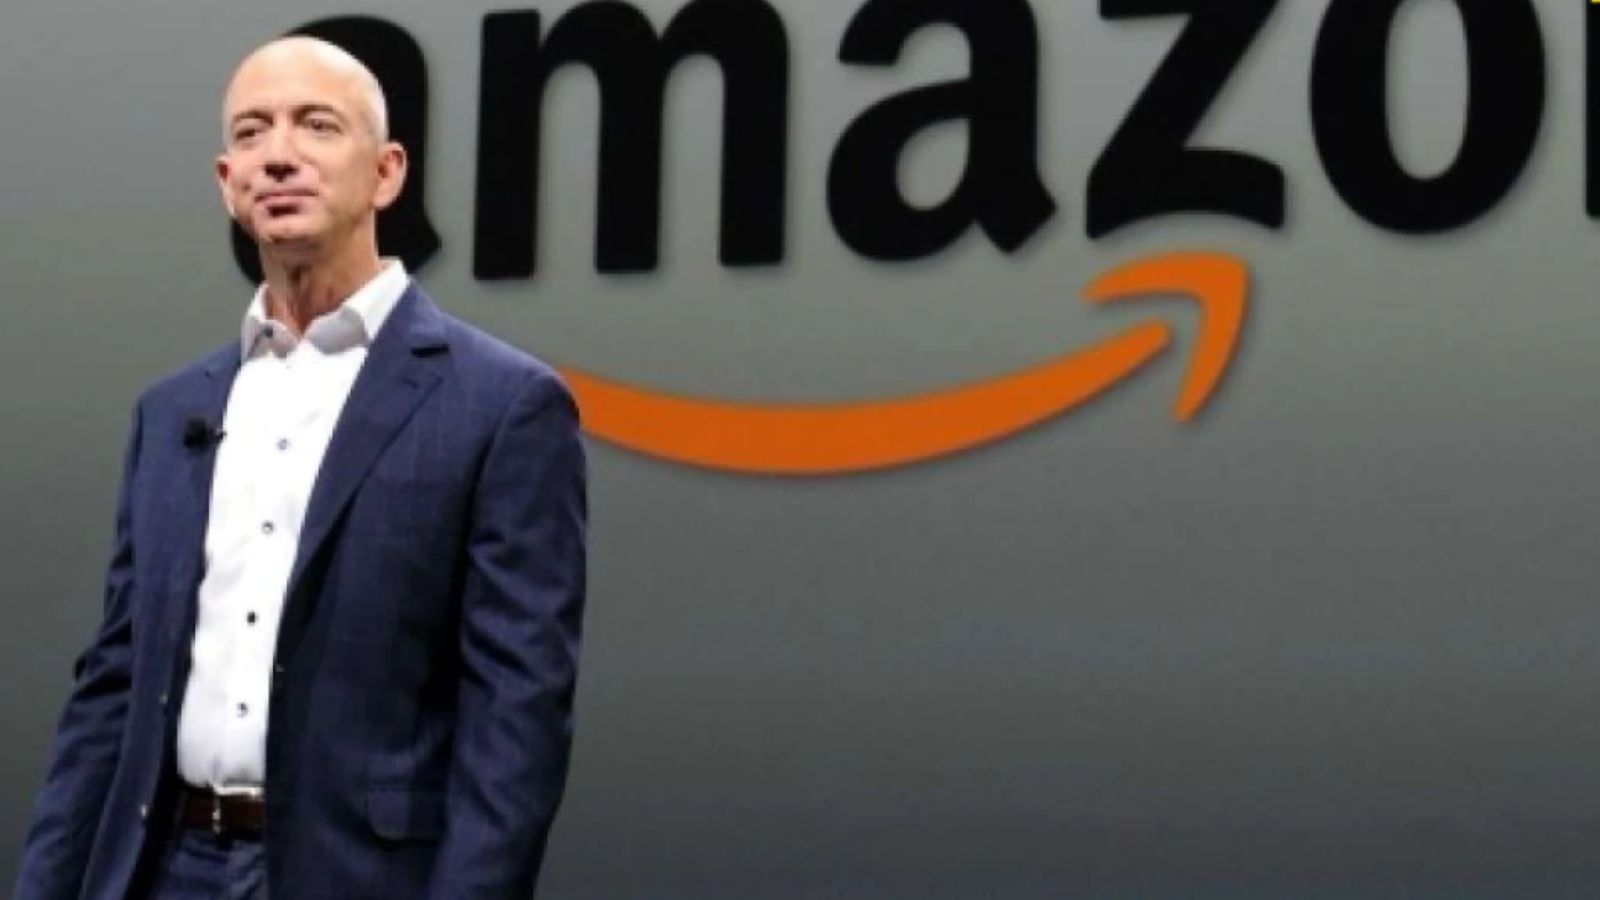  Don t splurge on TV fridge save money Amazon founder warns